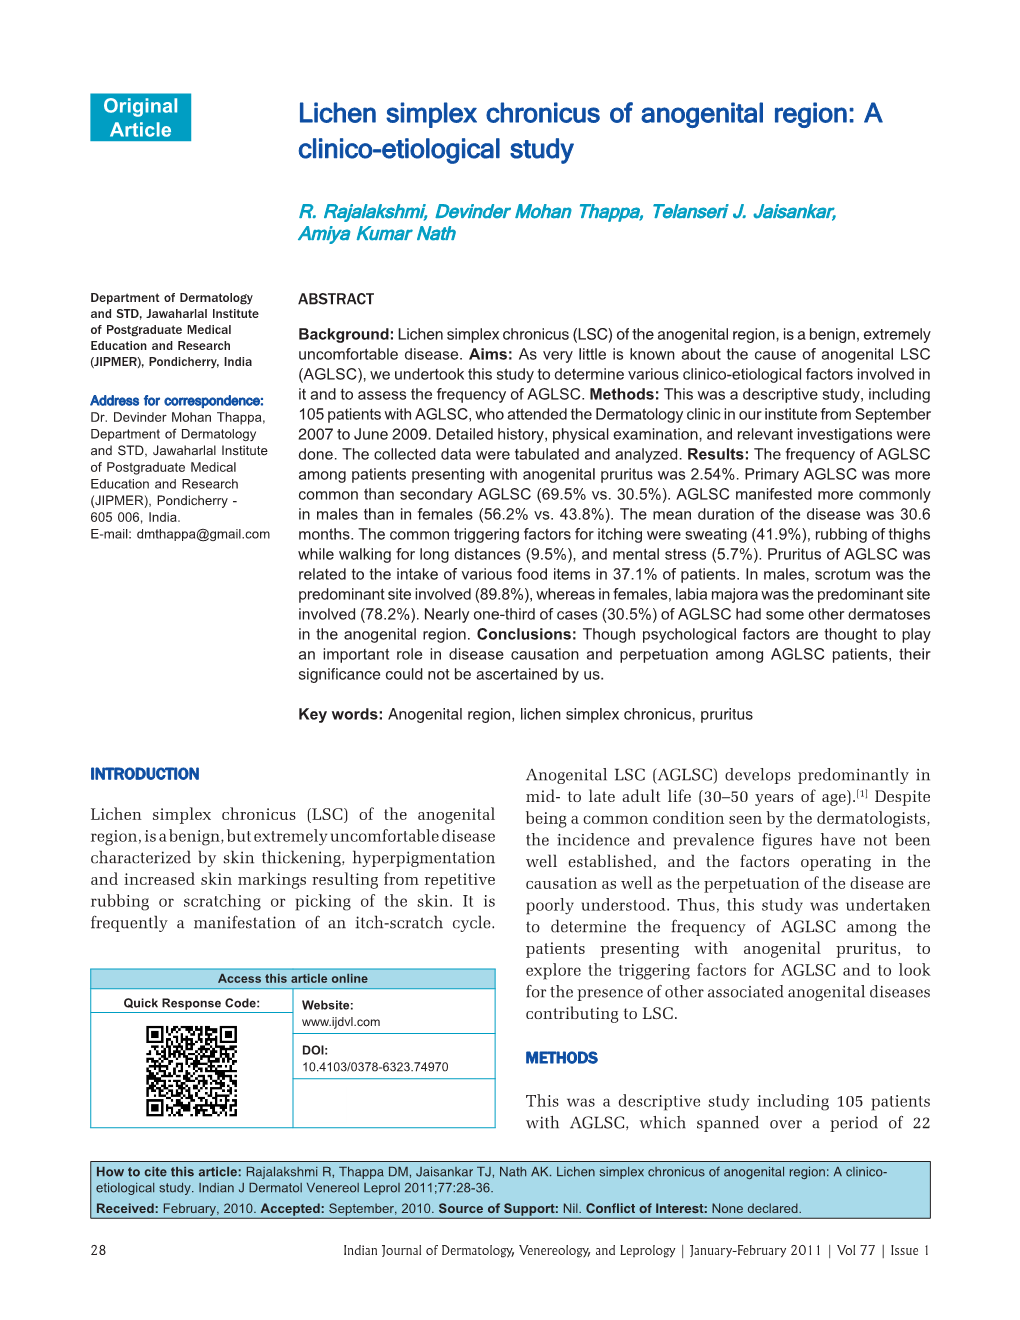 Lichen Simplex Chronicus of Anogenital Region: a Article Clinico-Etiological Study